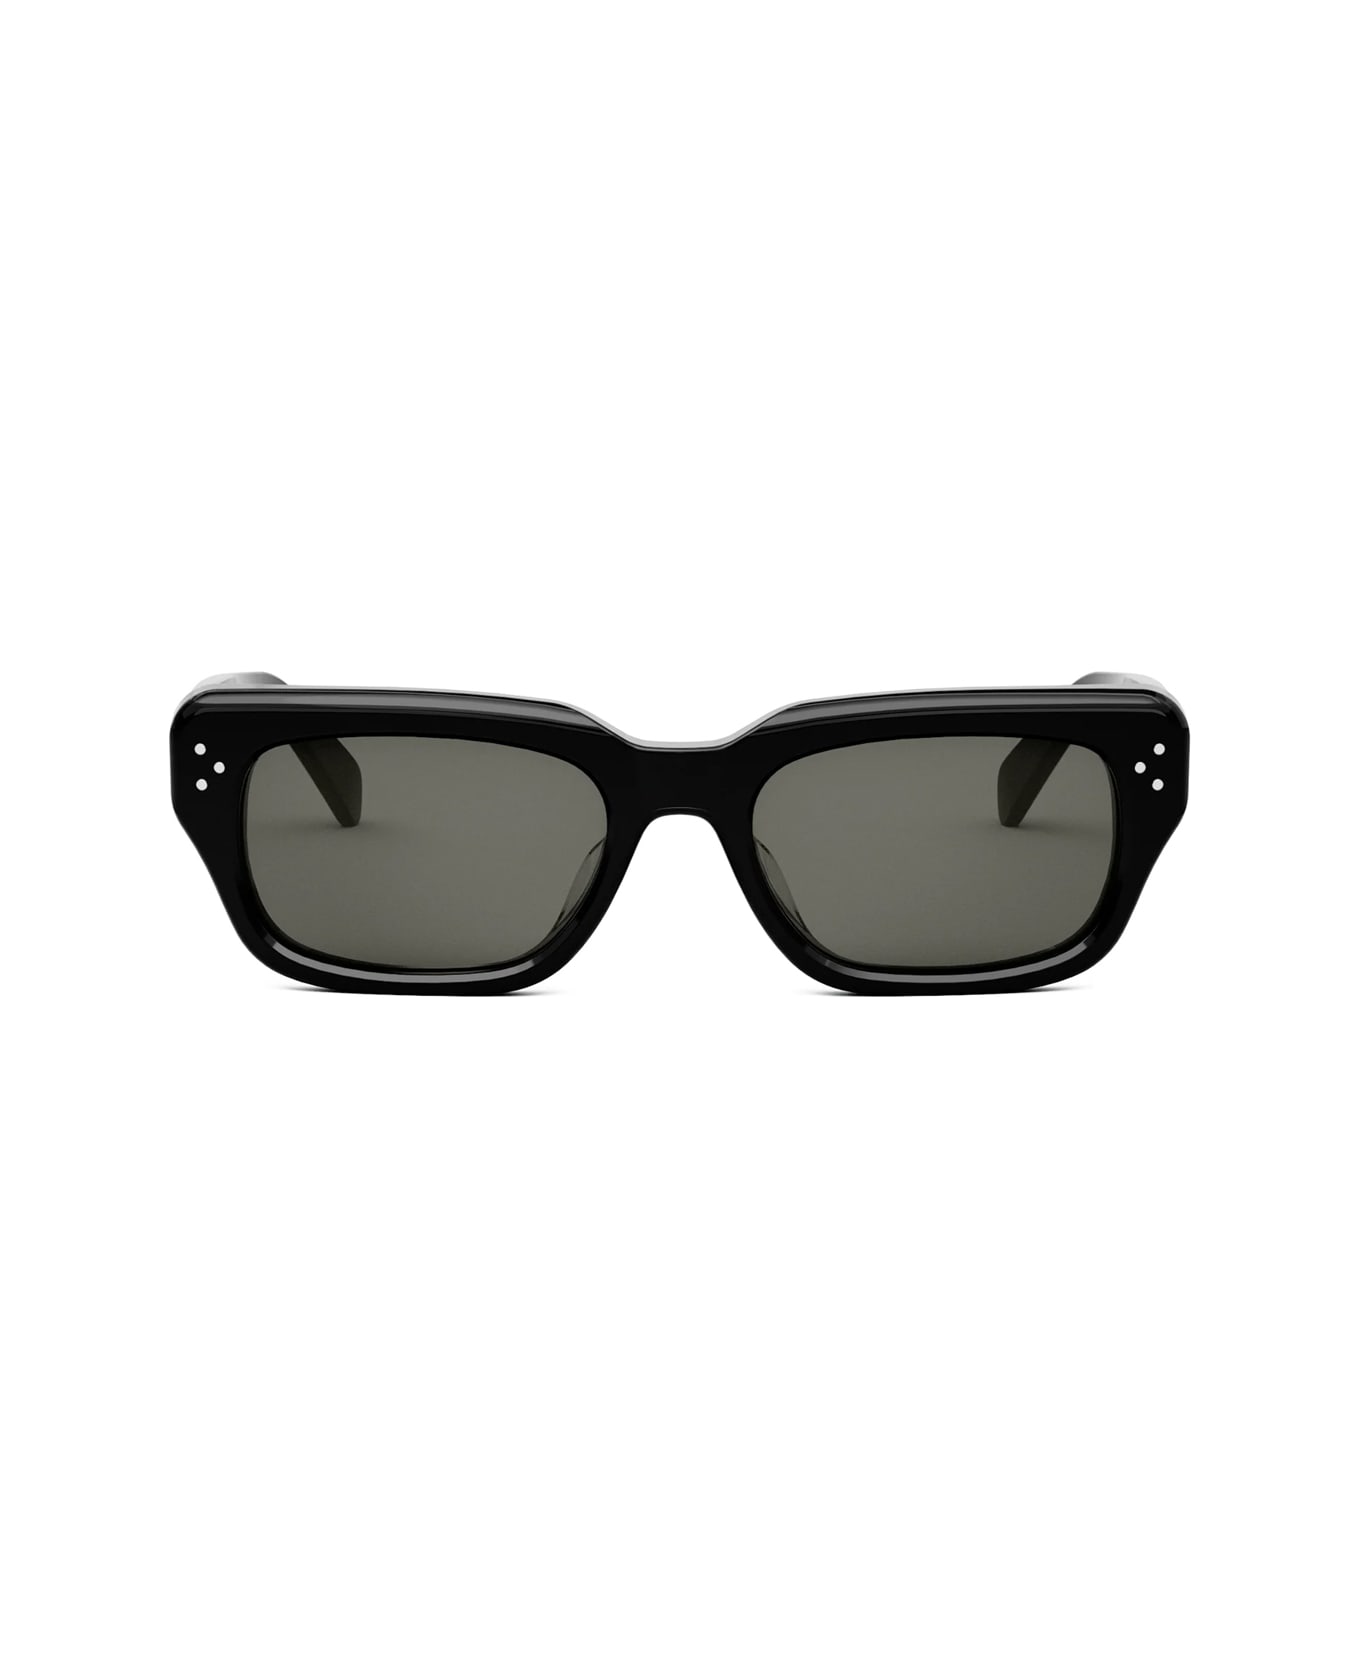 Celine Cl40267u 01a Sunglasses - Nero サングラス